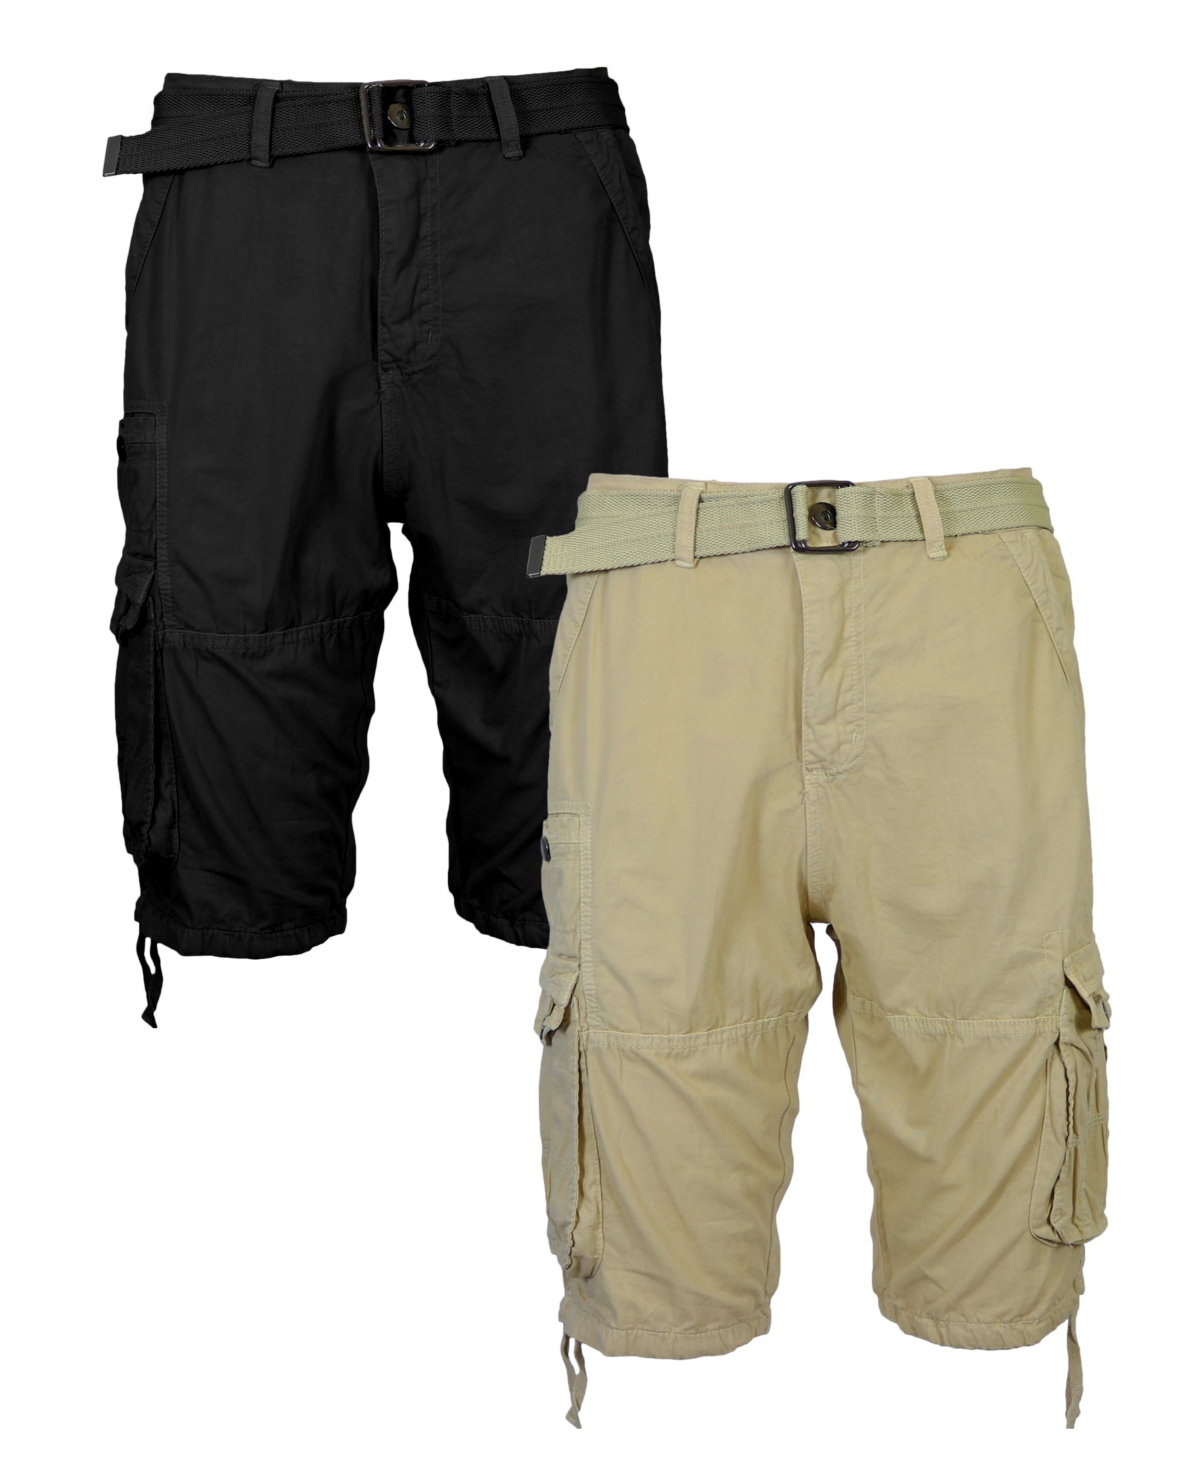 Men's Vintage-Like Cotton Cargo Belted Shorts, Pack of 2 - Olive-Light Khaki